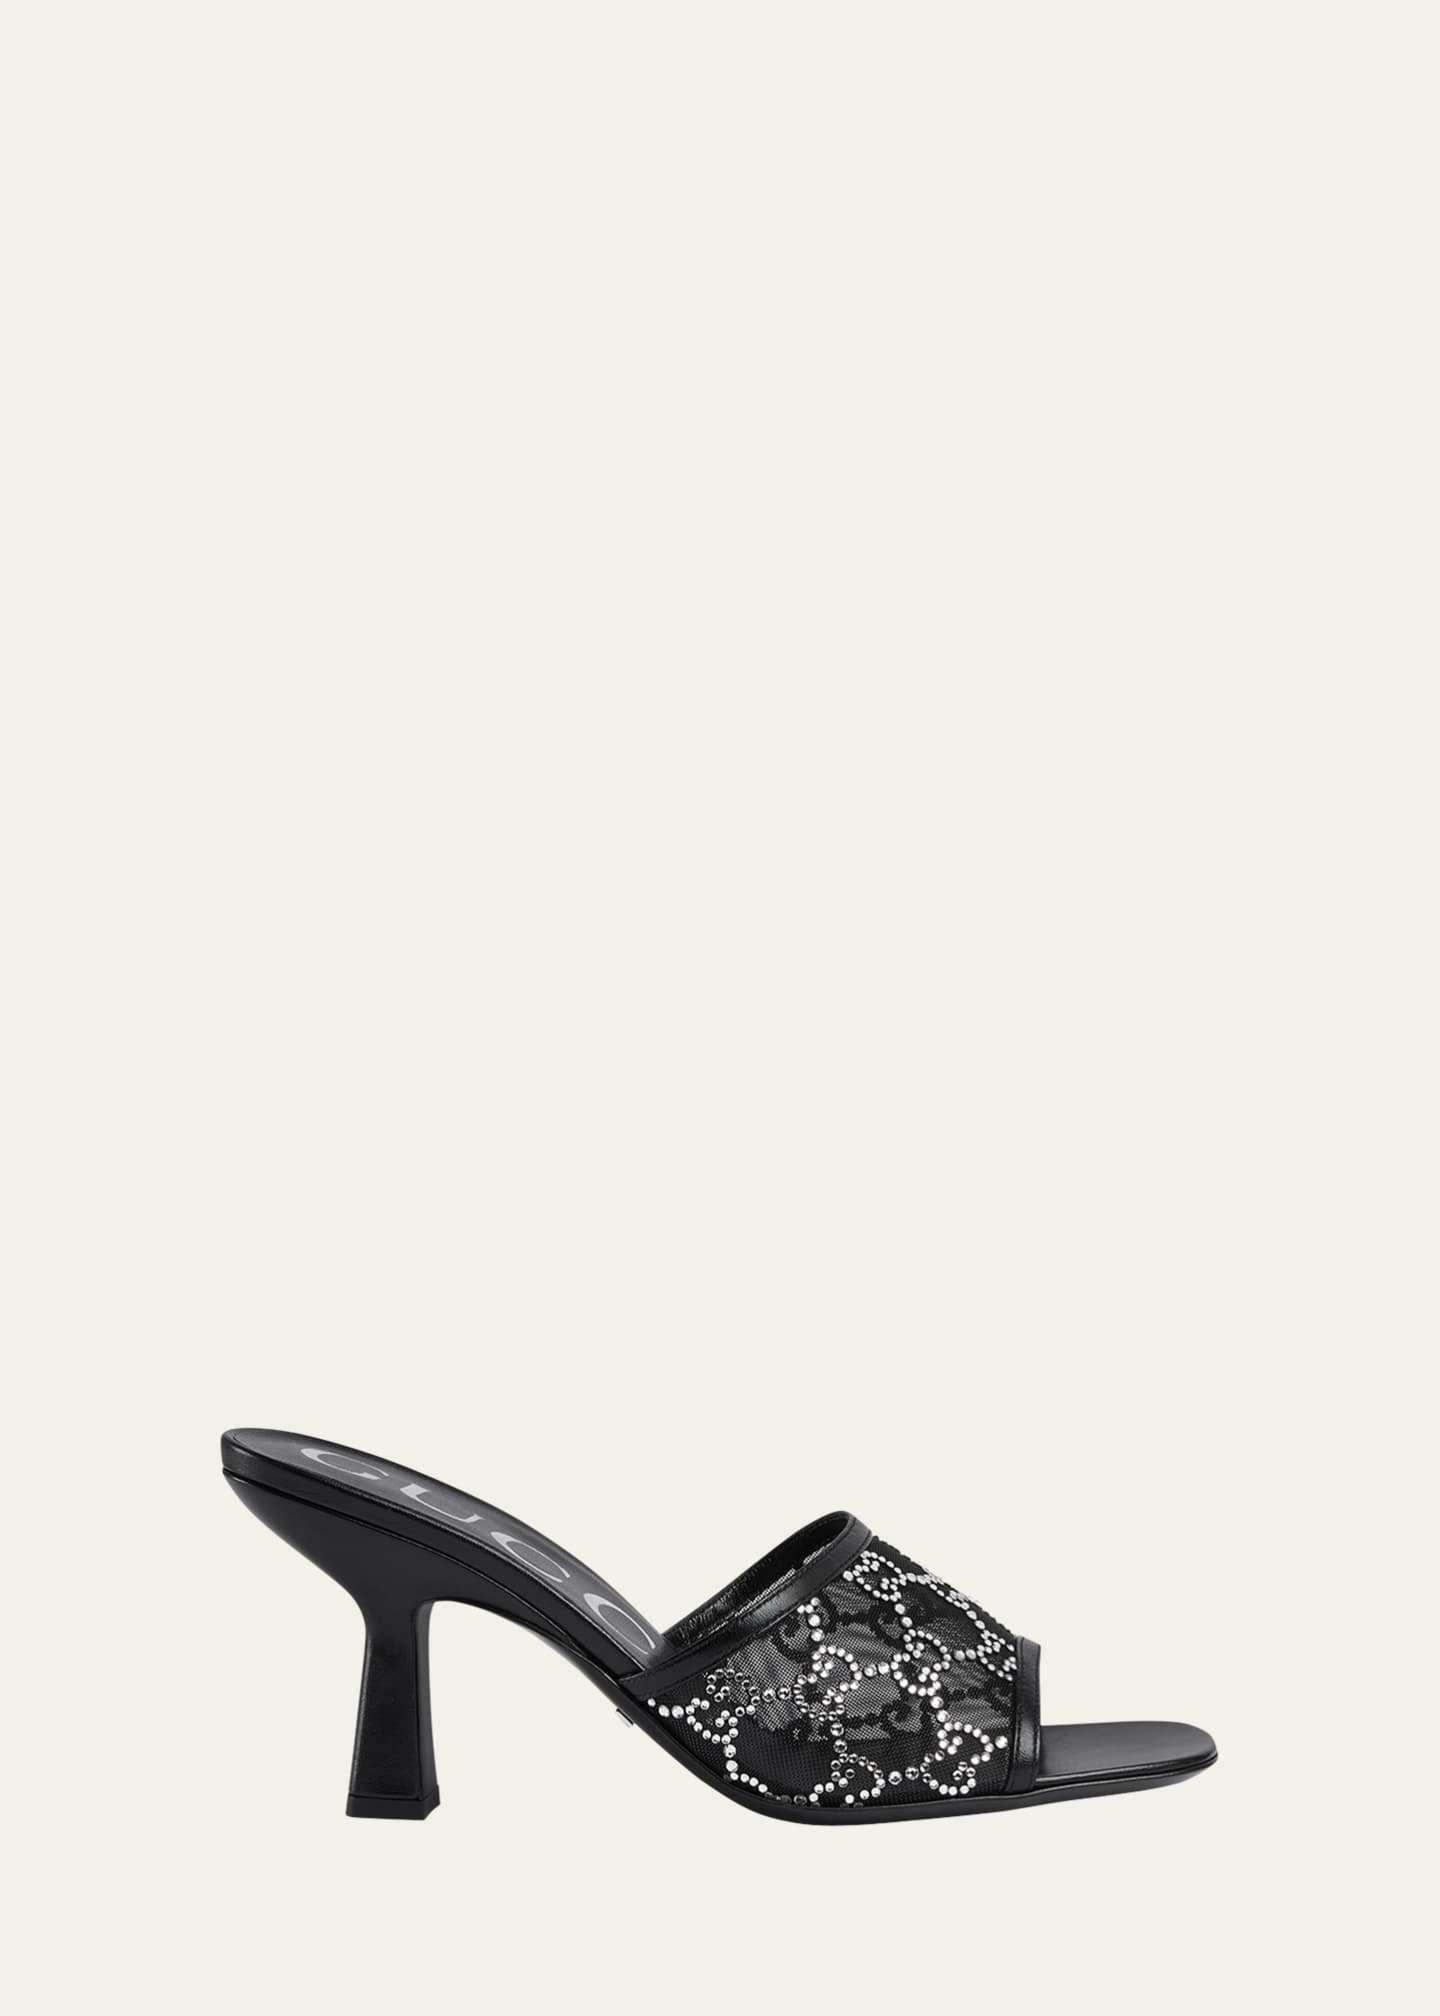 Heel Shoes 1 Rhinestone Design Instant Download